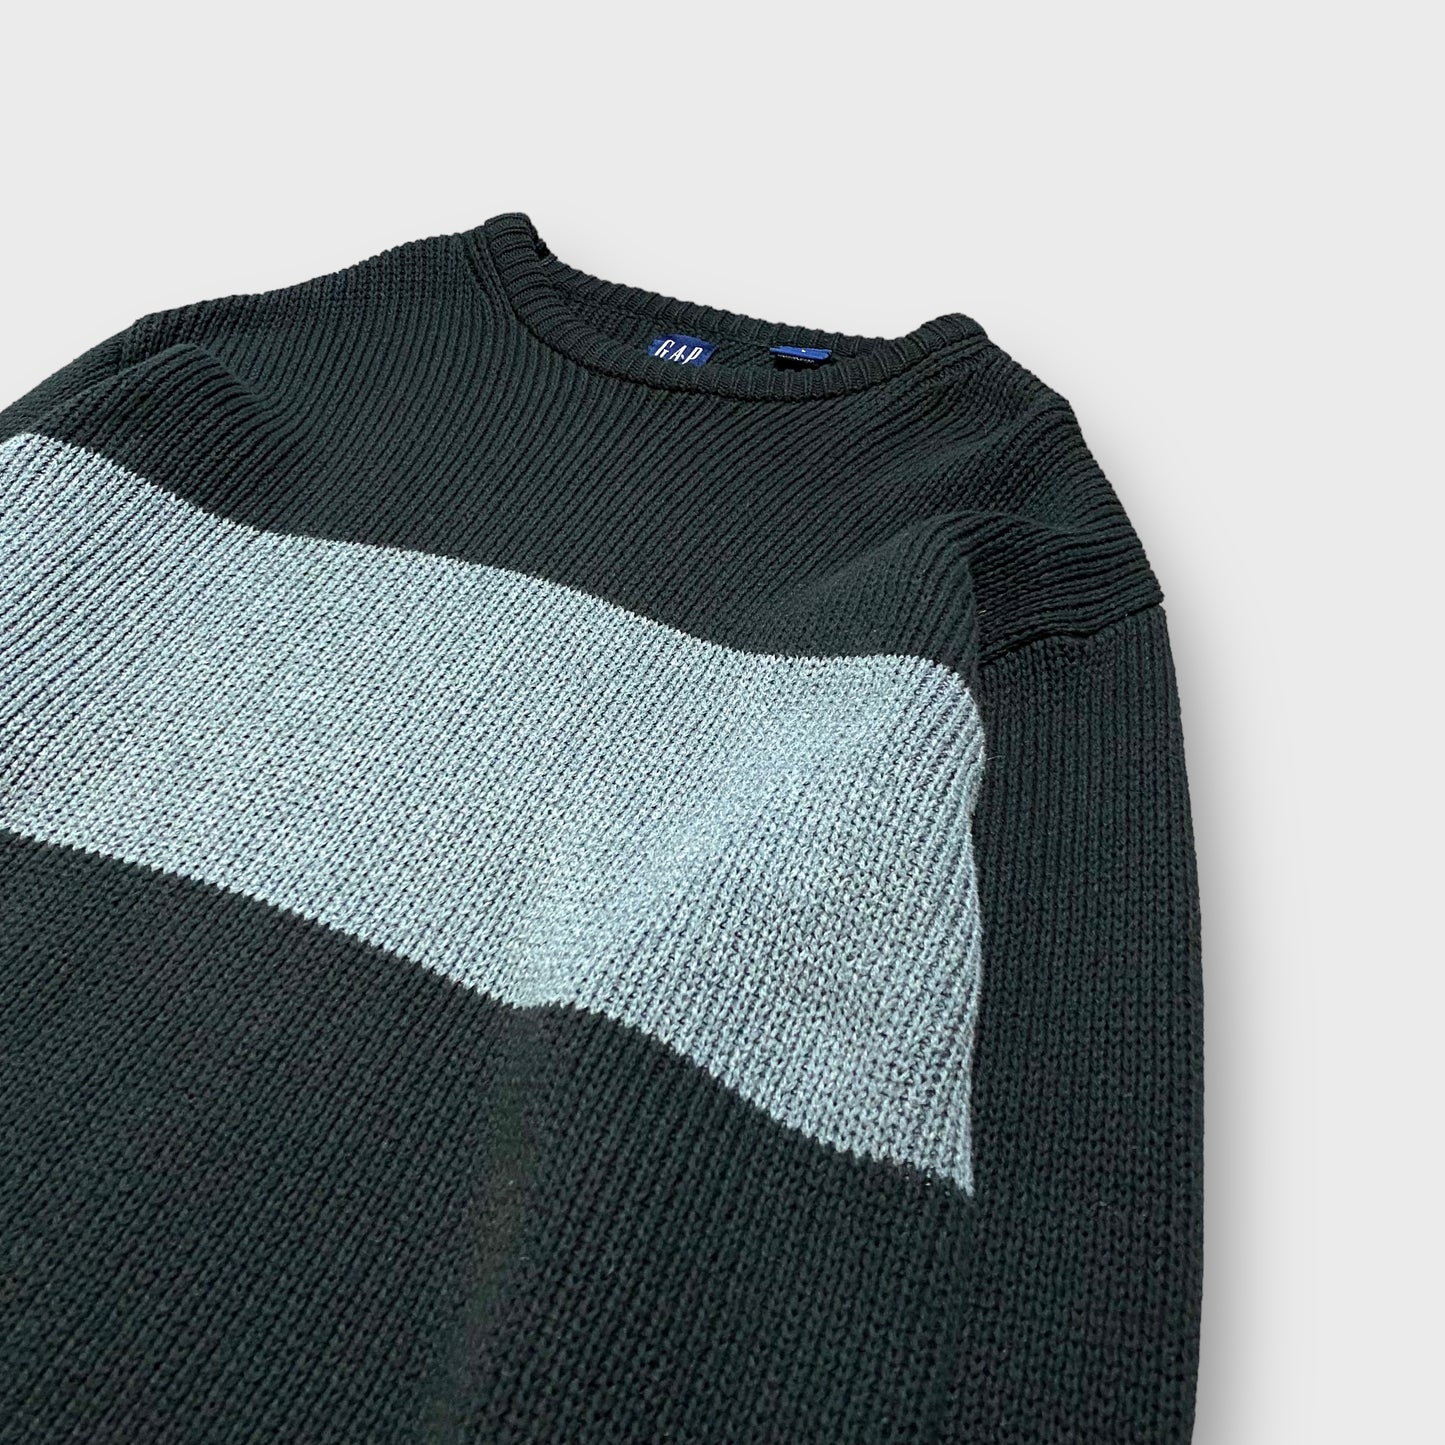 90's "GAP" Border design ridge knit sweater